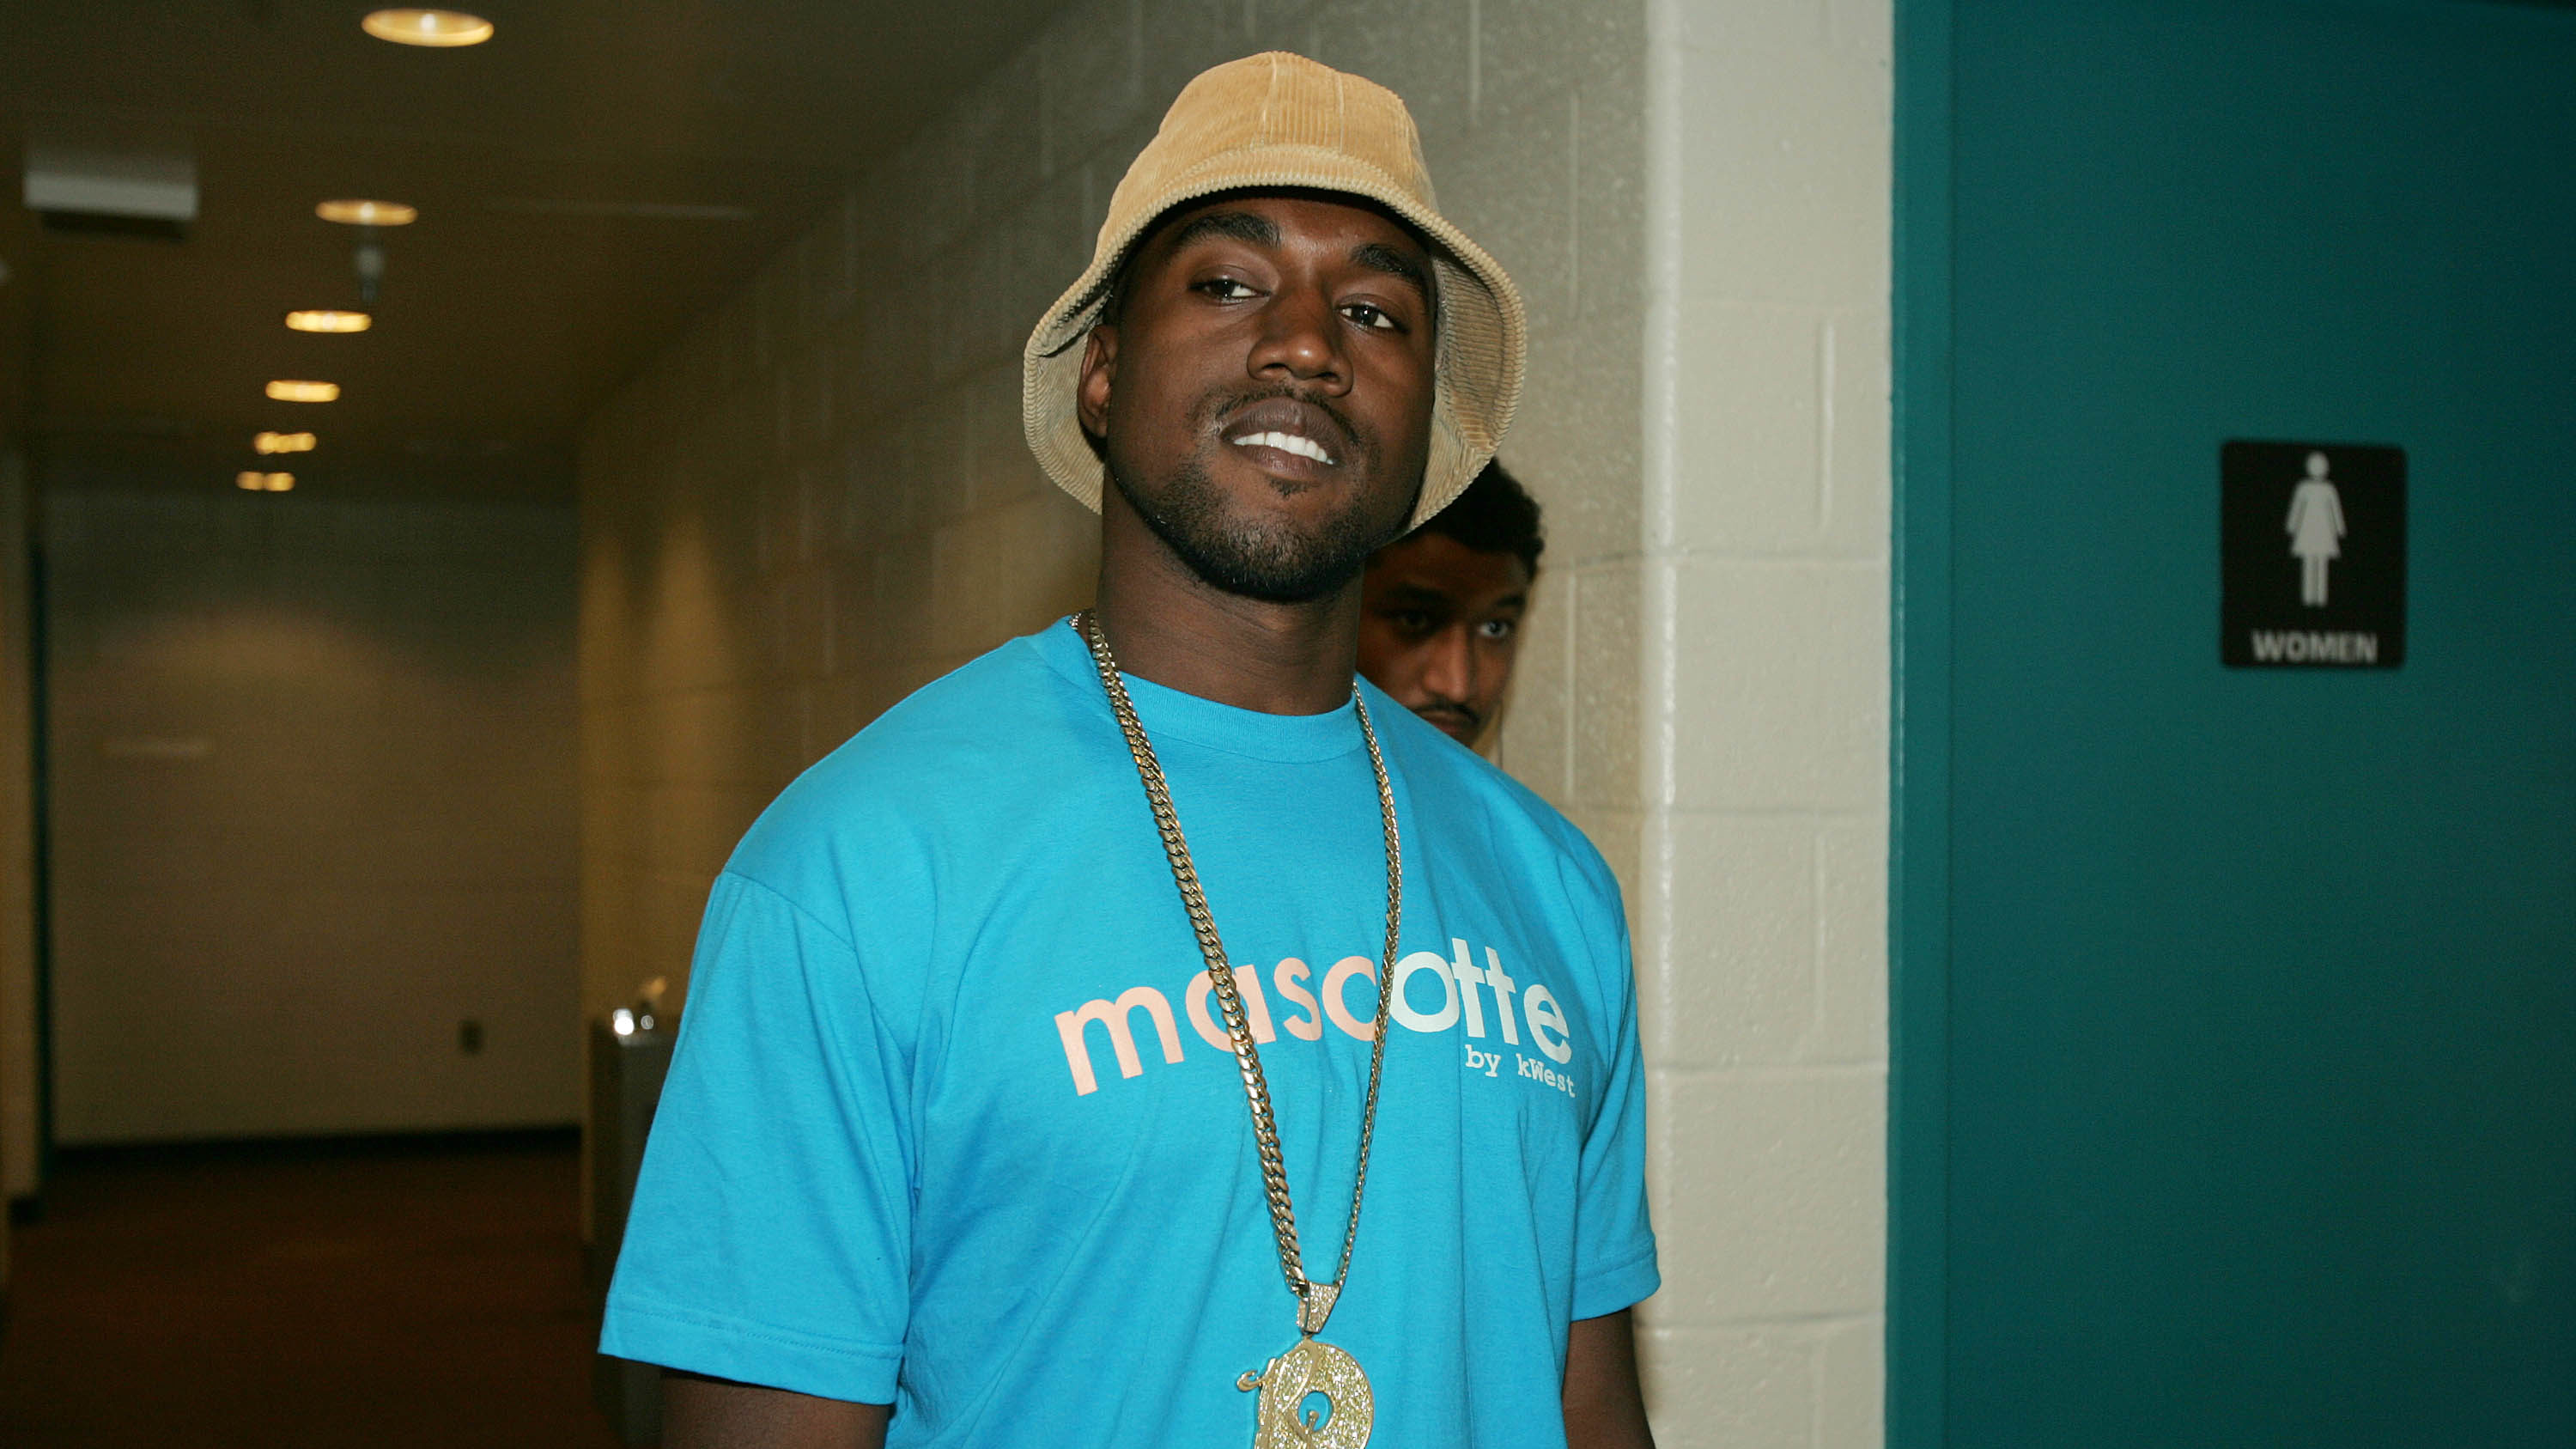 Kanye West - Louis Vuitton Line - The Best Hip-Hop Trainer